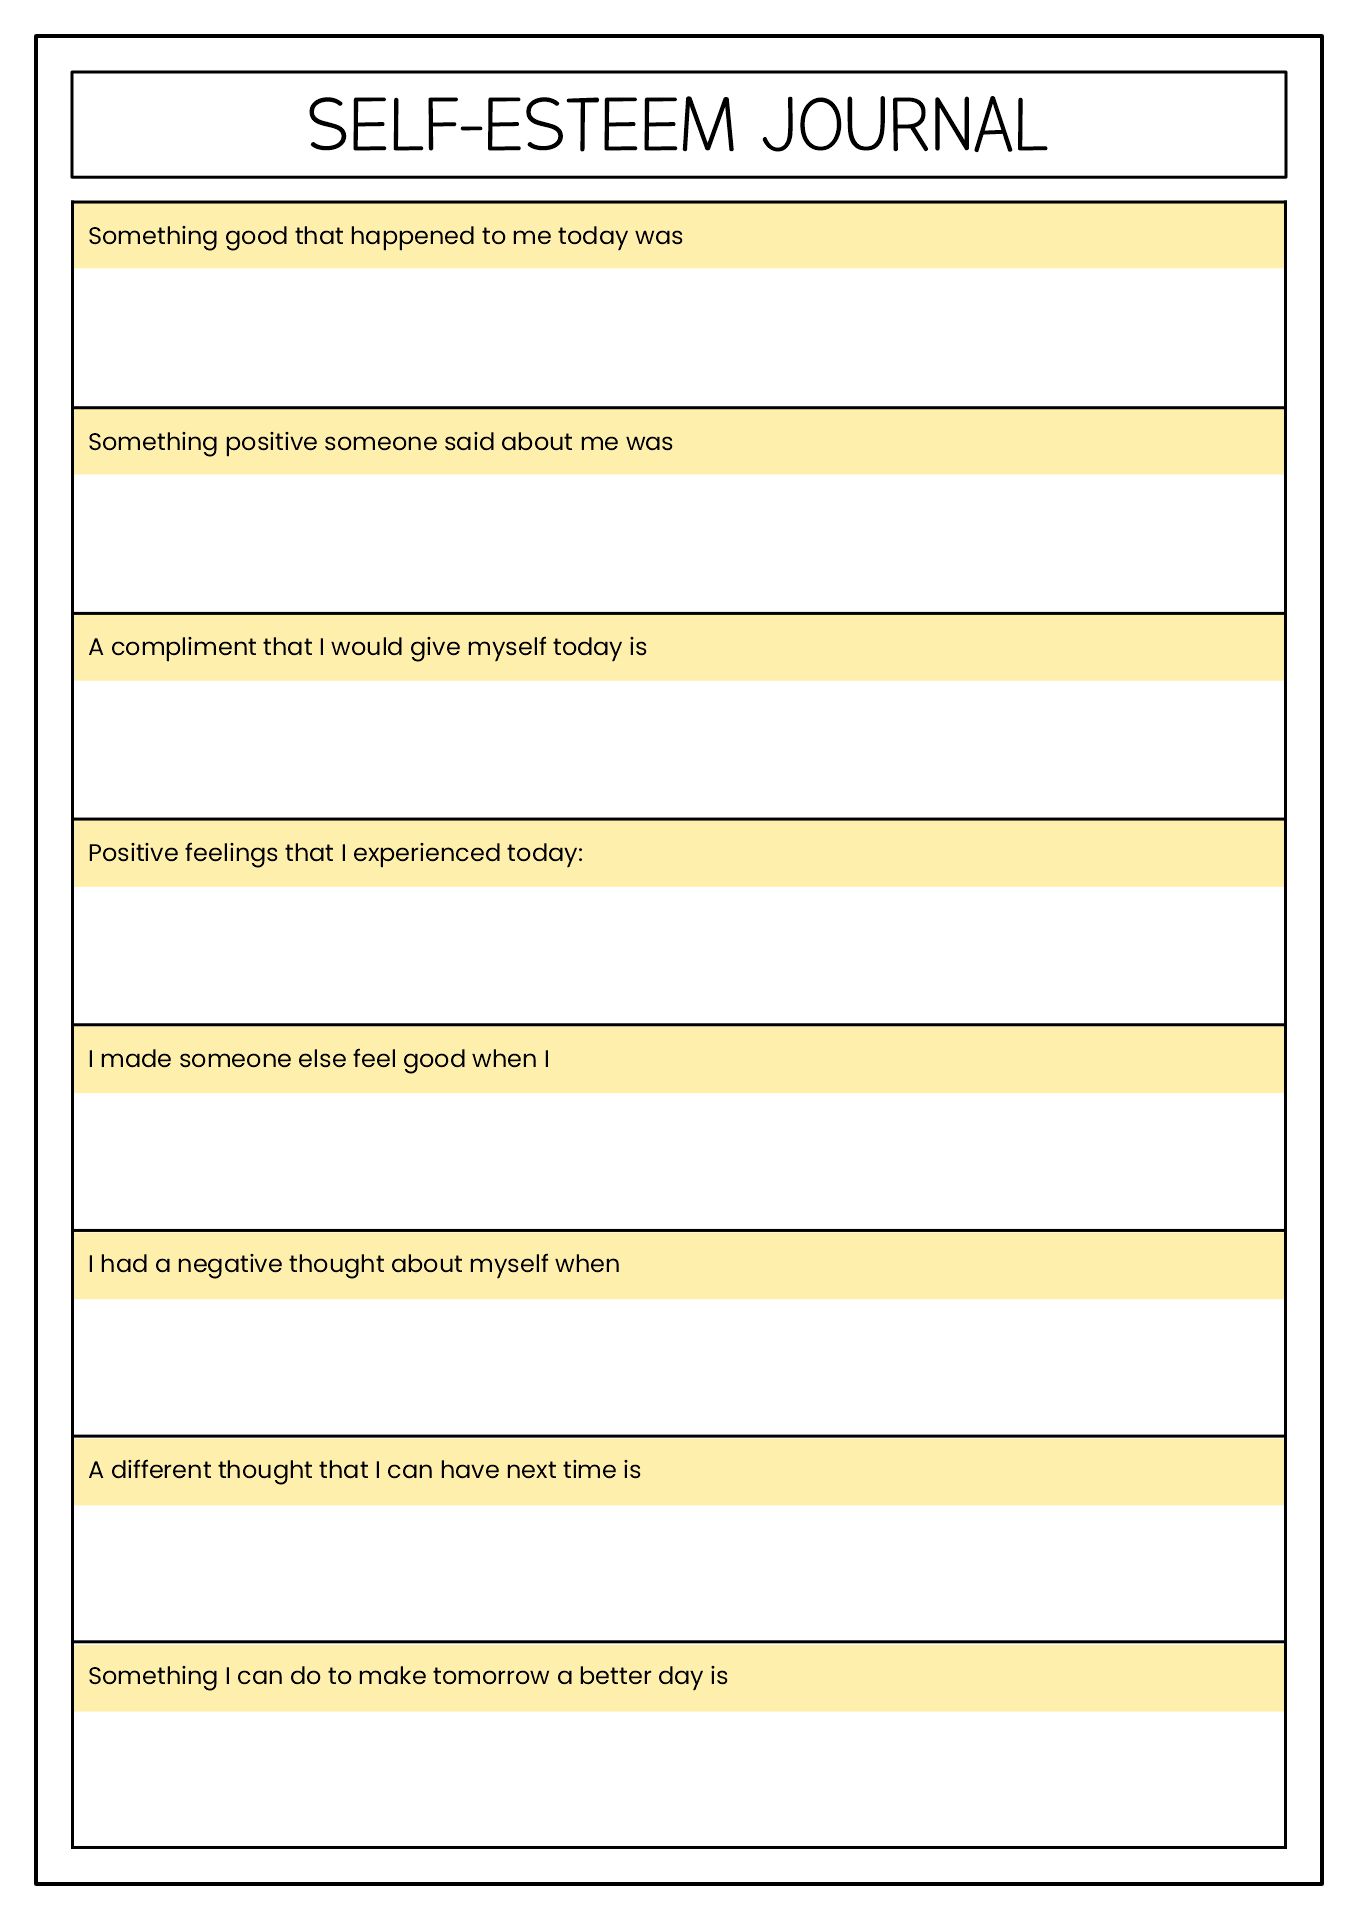 Self-Esteem Journal Worksheet